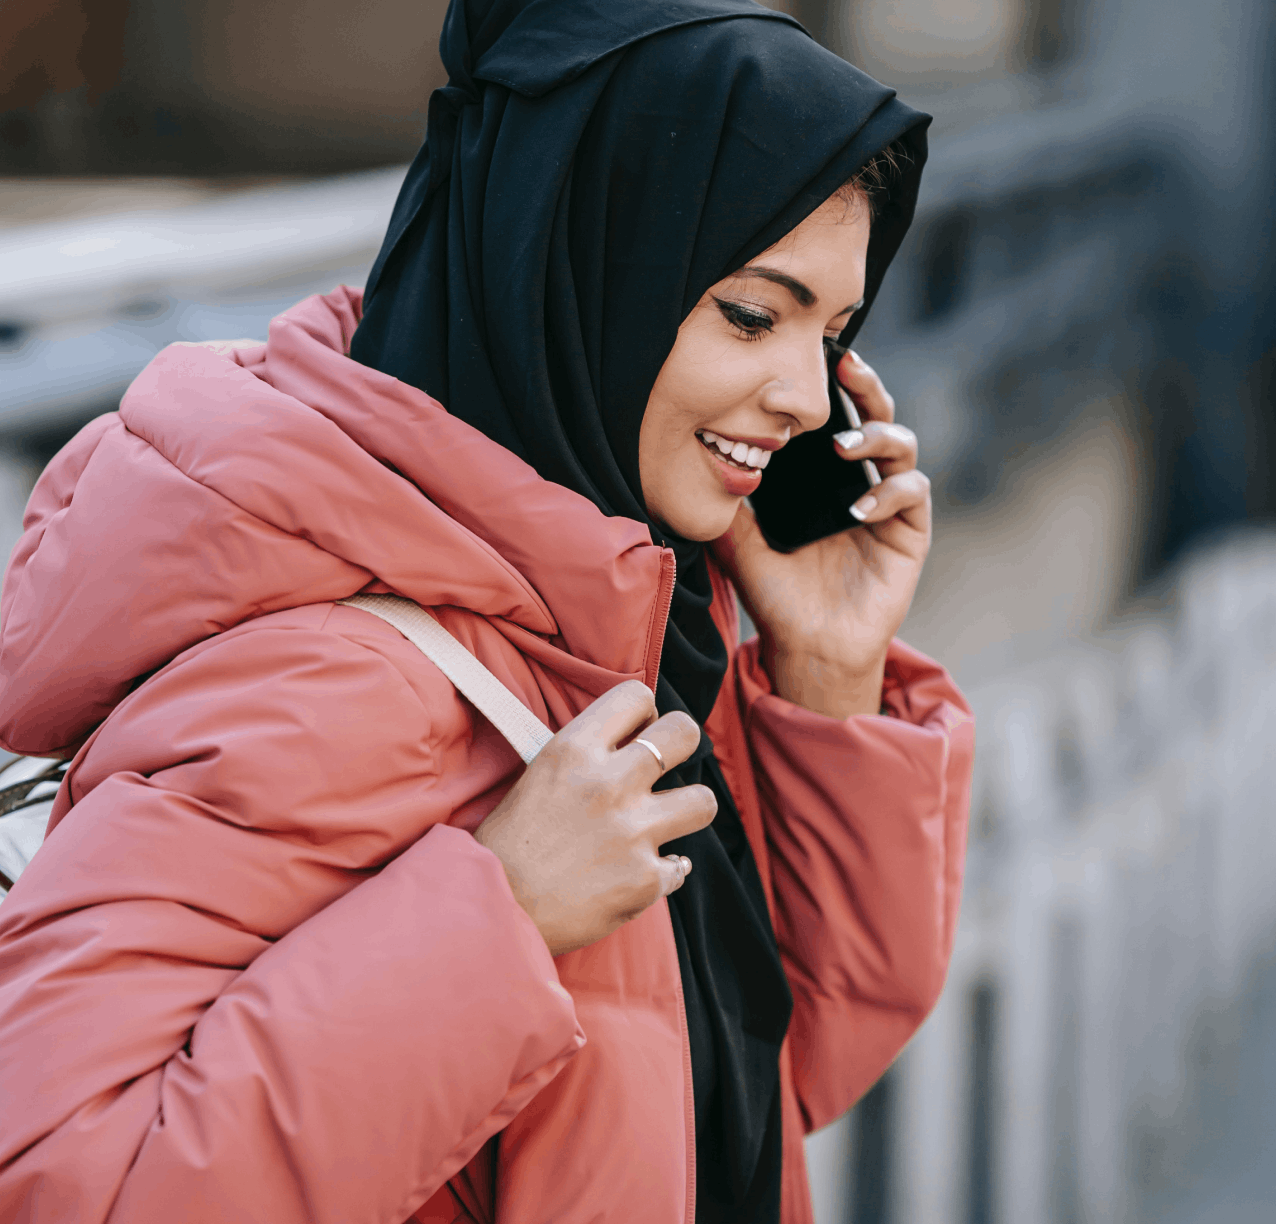 woman wearing coat talking on the phone outside